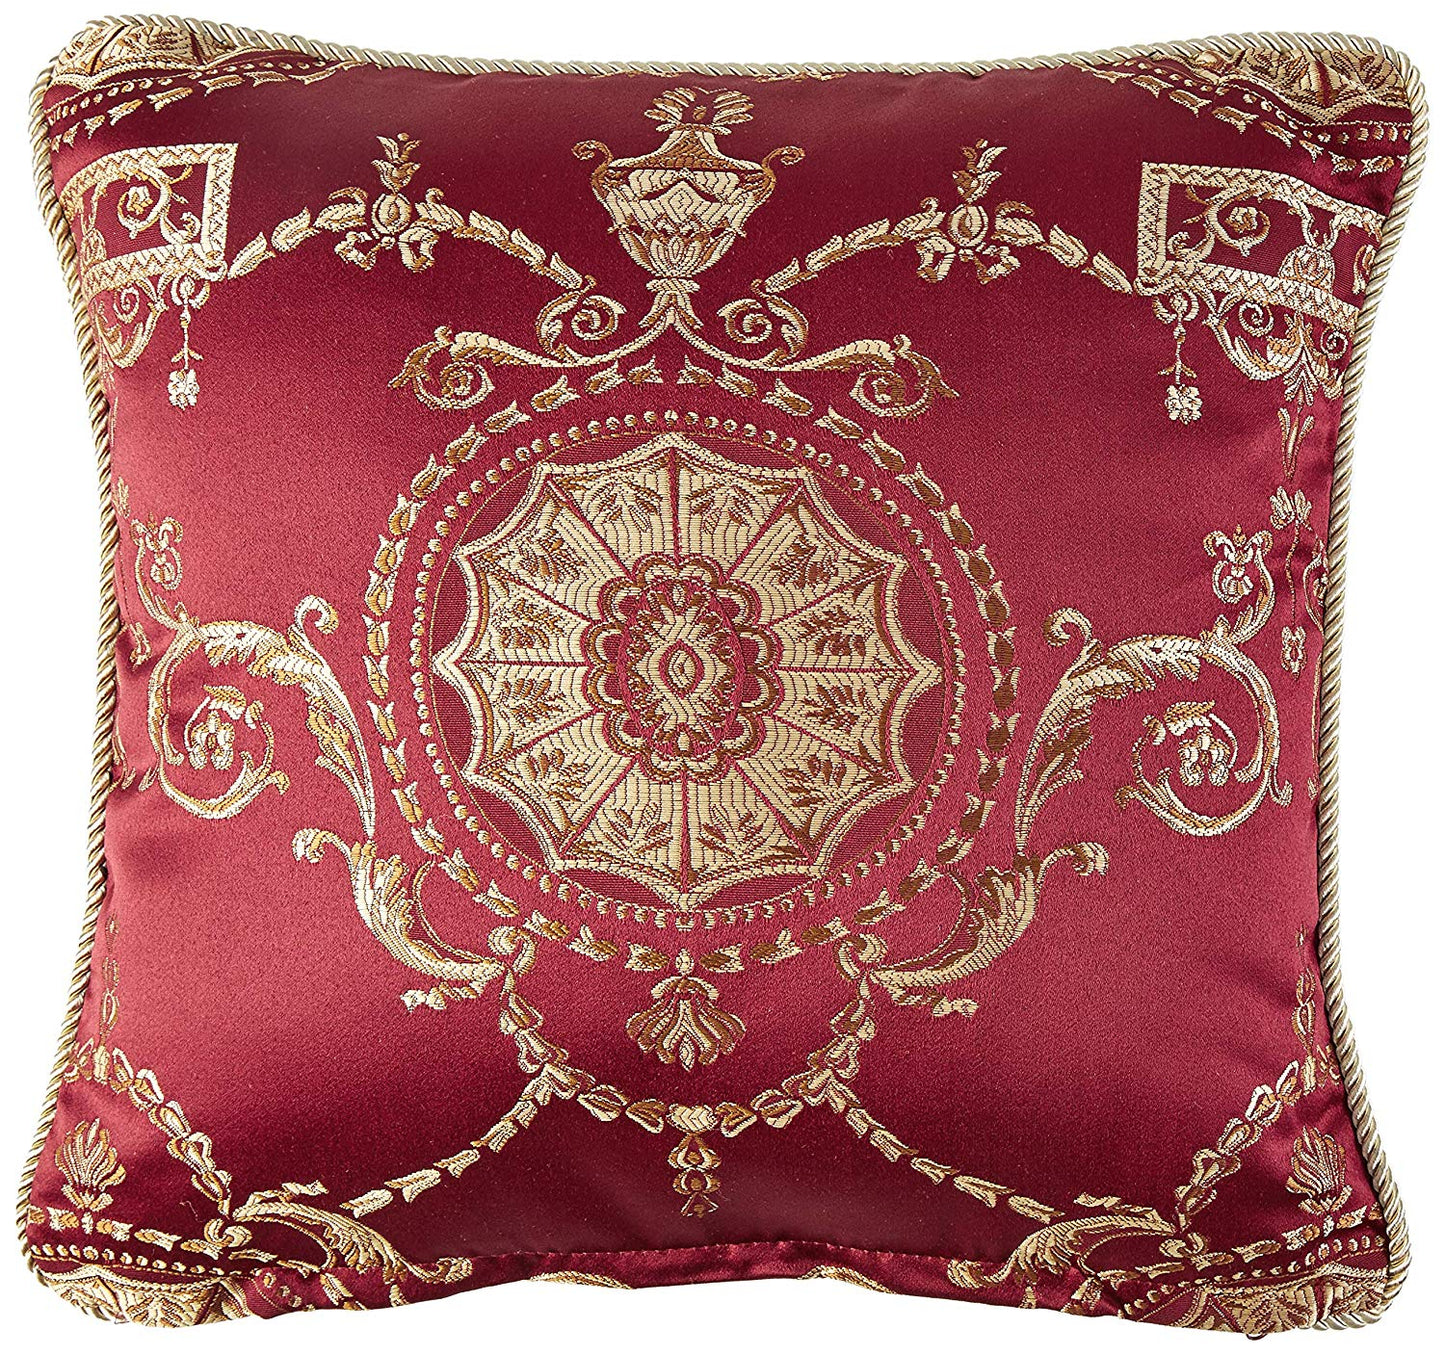 Prestige Damask Decorative Throw Pillow Covers